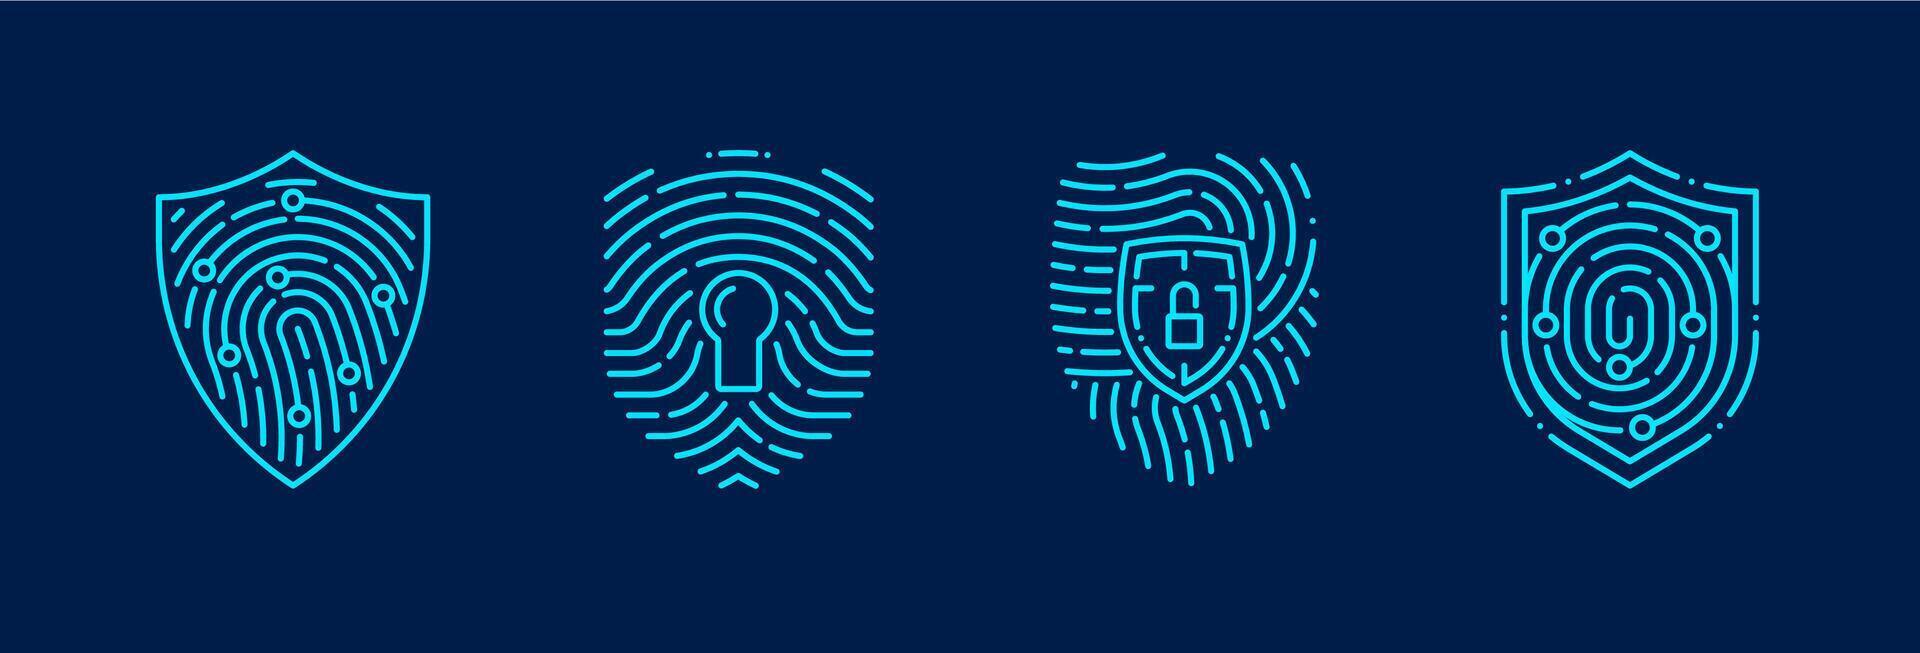 Fingerprint shield icon for secure lock technology vector